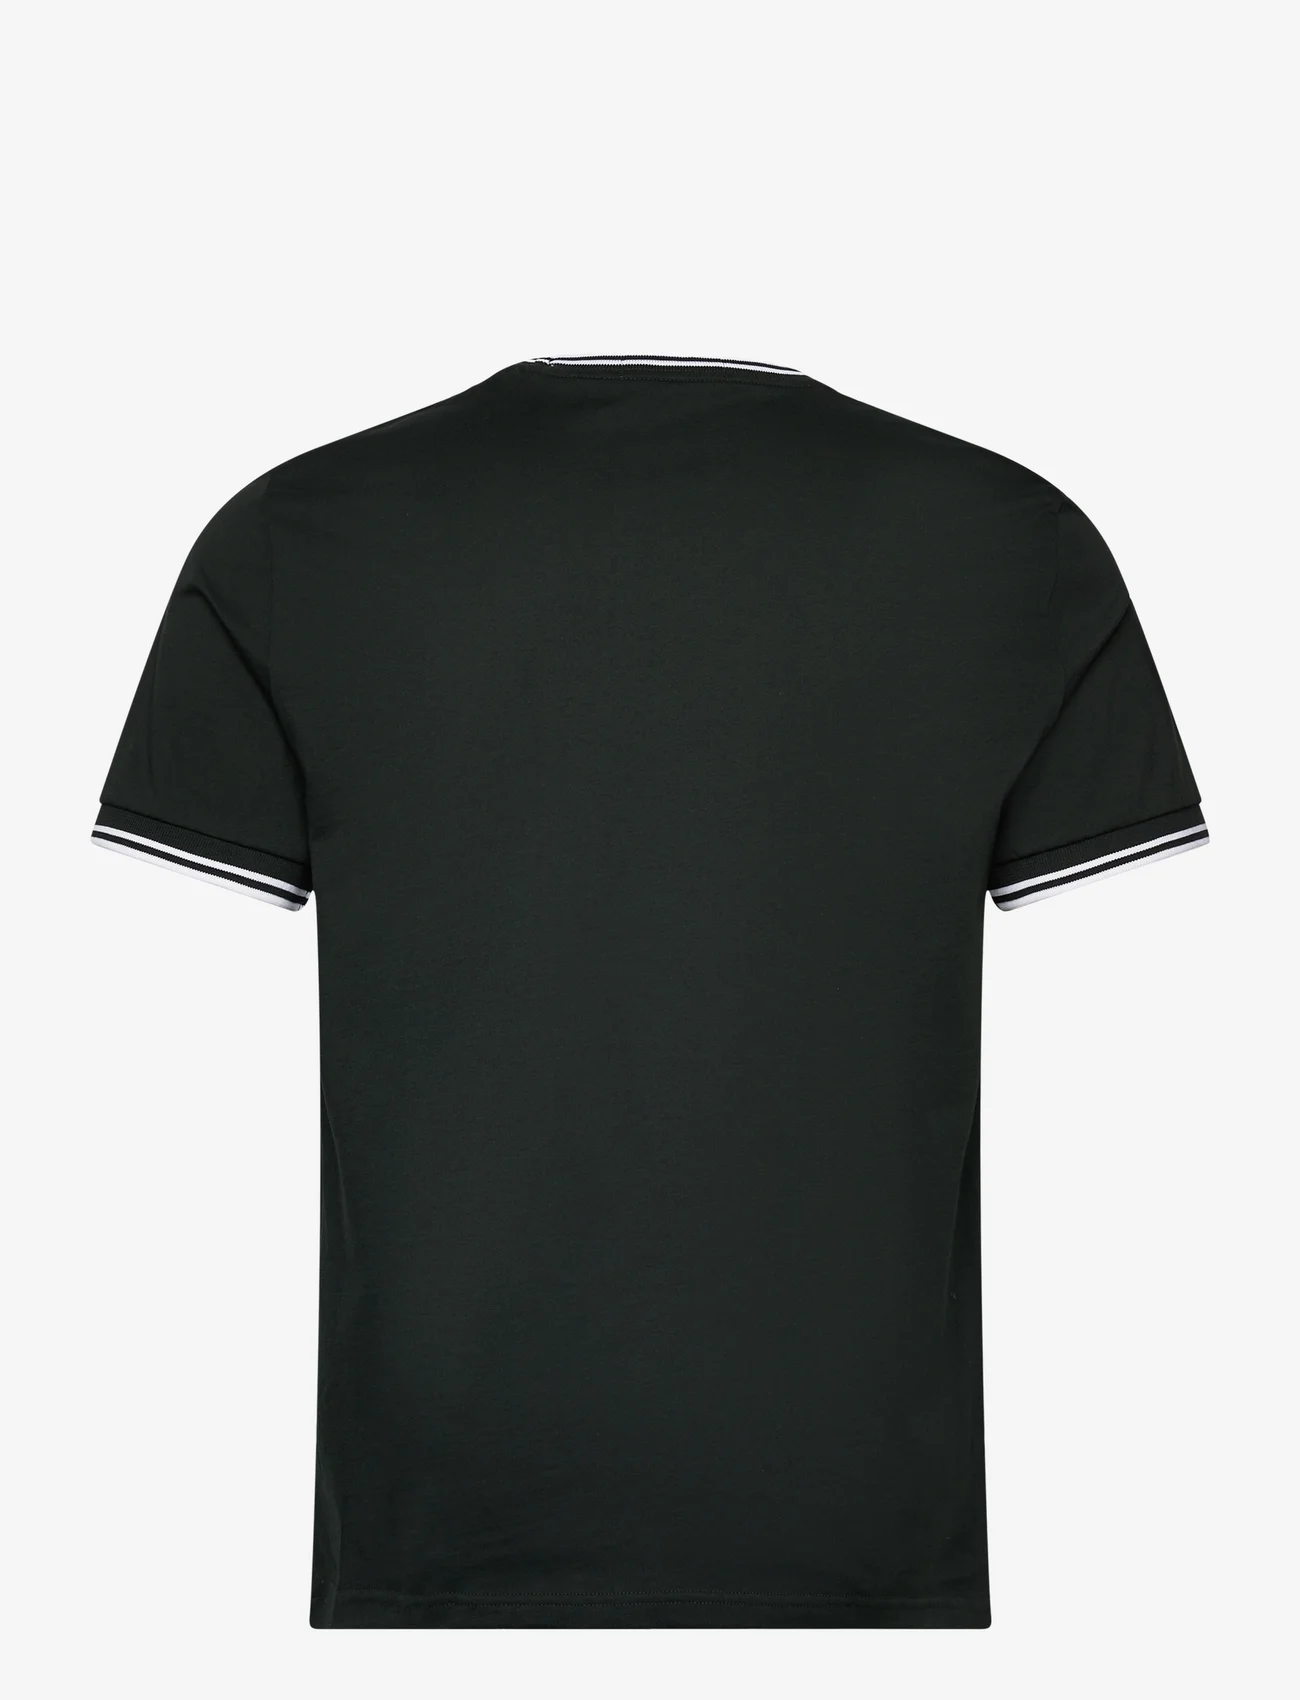 Fred Perry - TWIN TIPPED T-SHIRT - laisvalaikio marškinėliai - nightgreen/snwht - 1